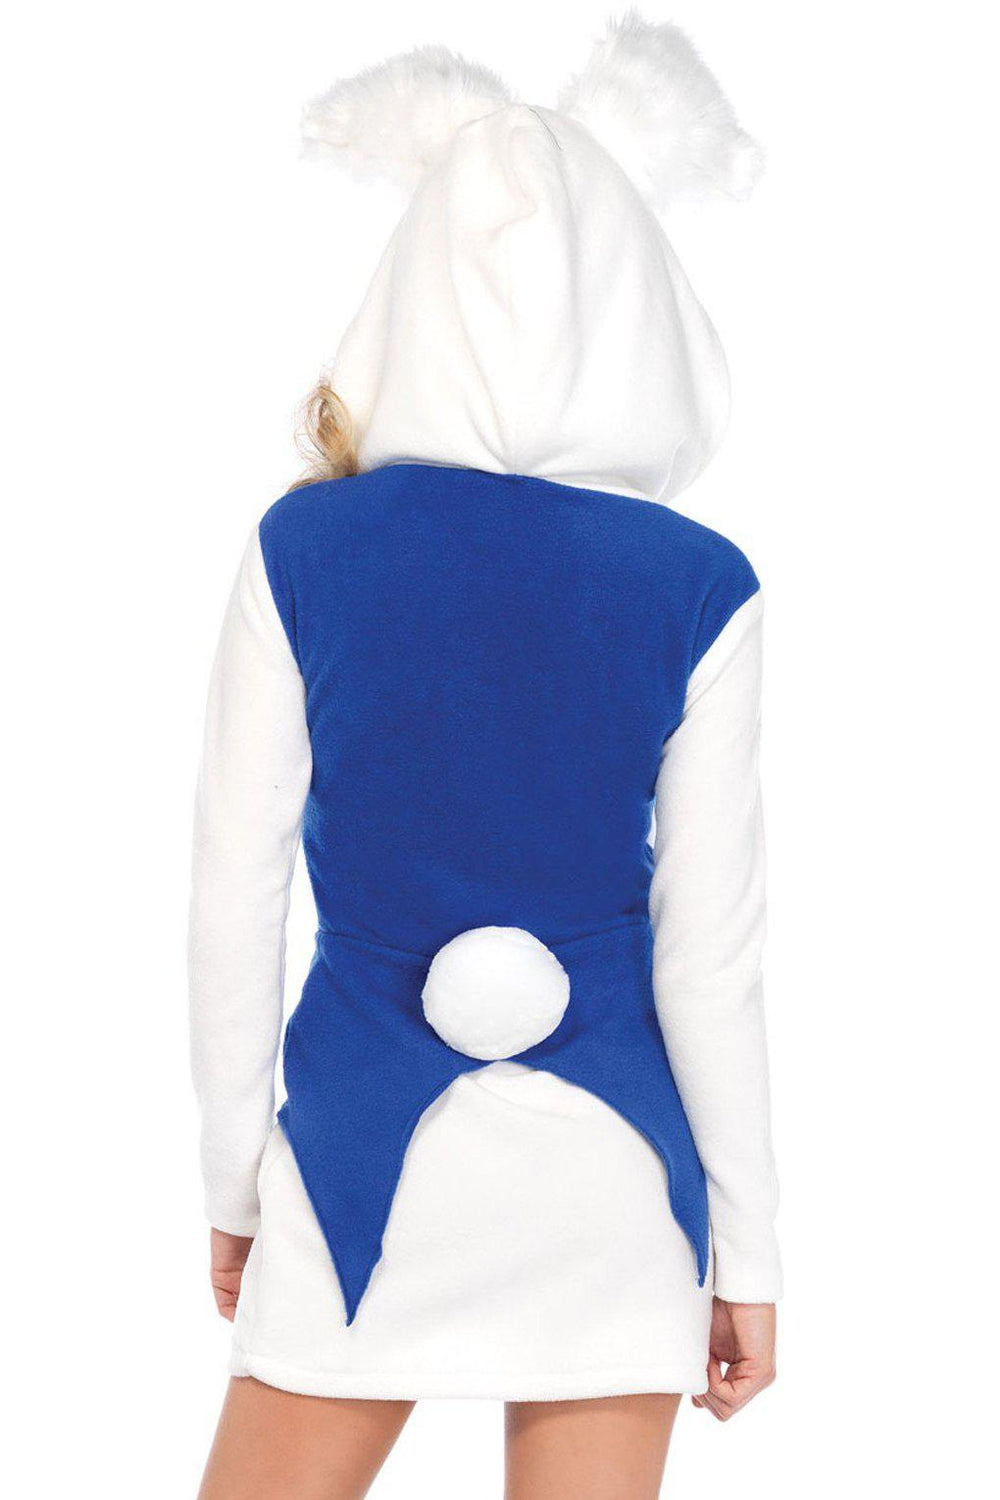 White Rabbit Zip Front Costume-Animal Costumes-Leg Avenue-SEXYSHOES.COM